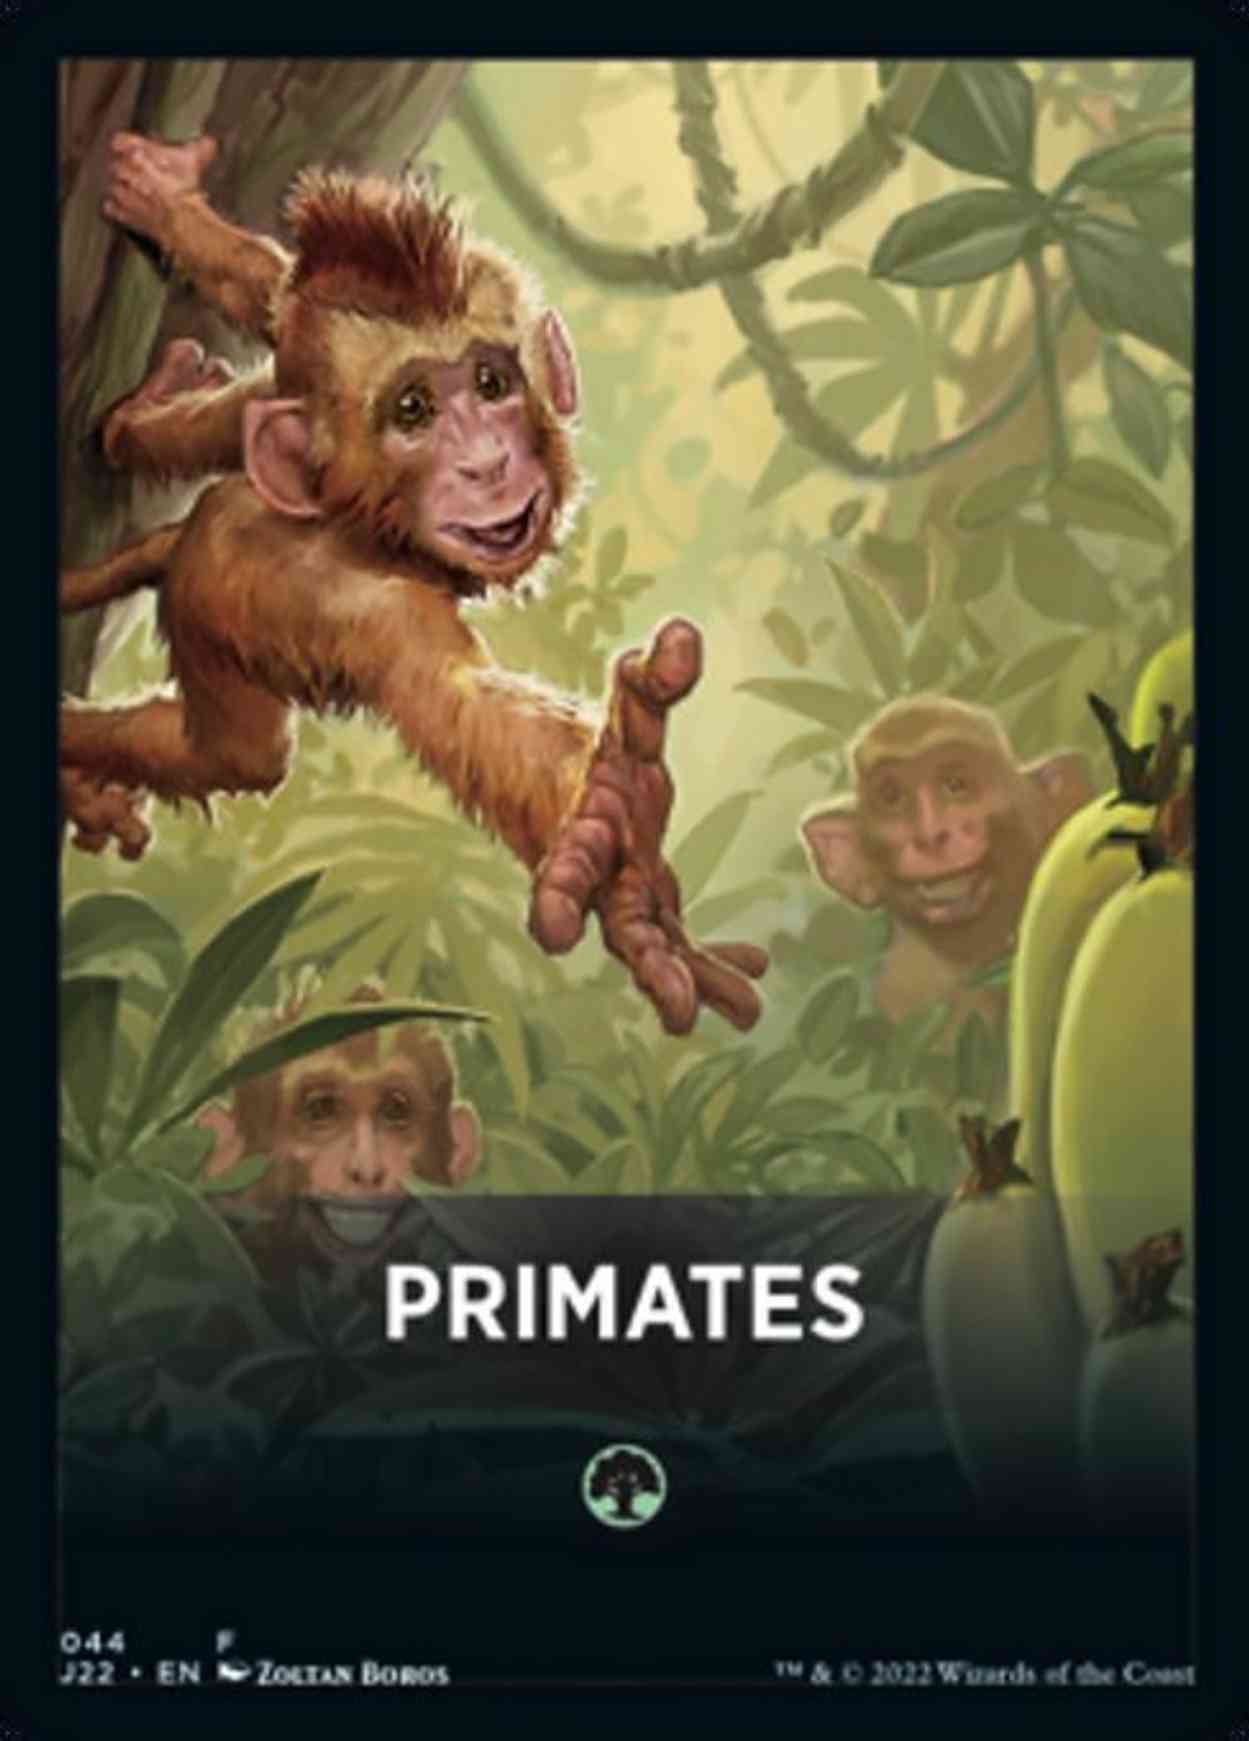 Primates Theme Card magic card front